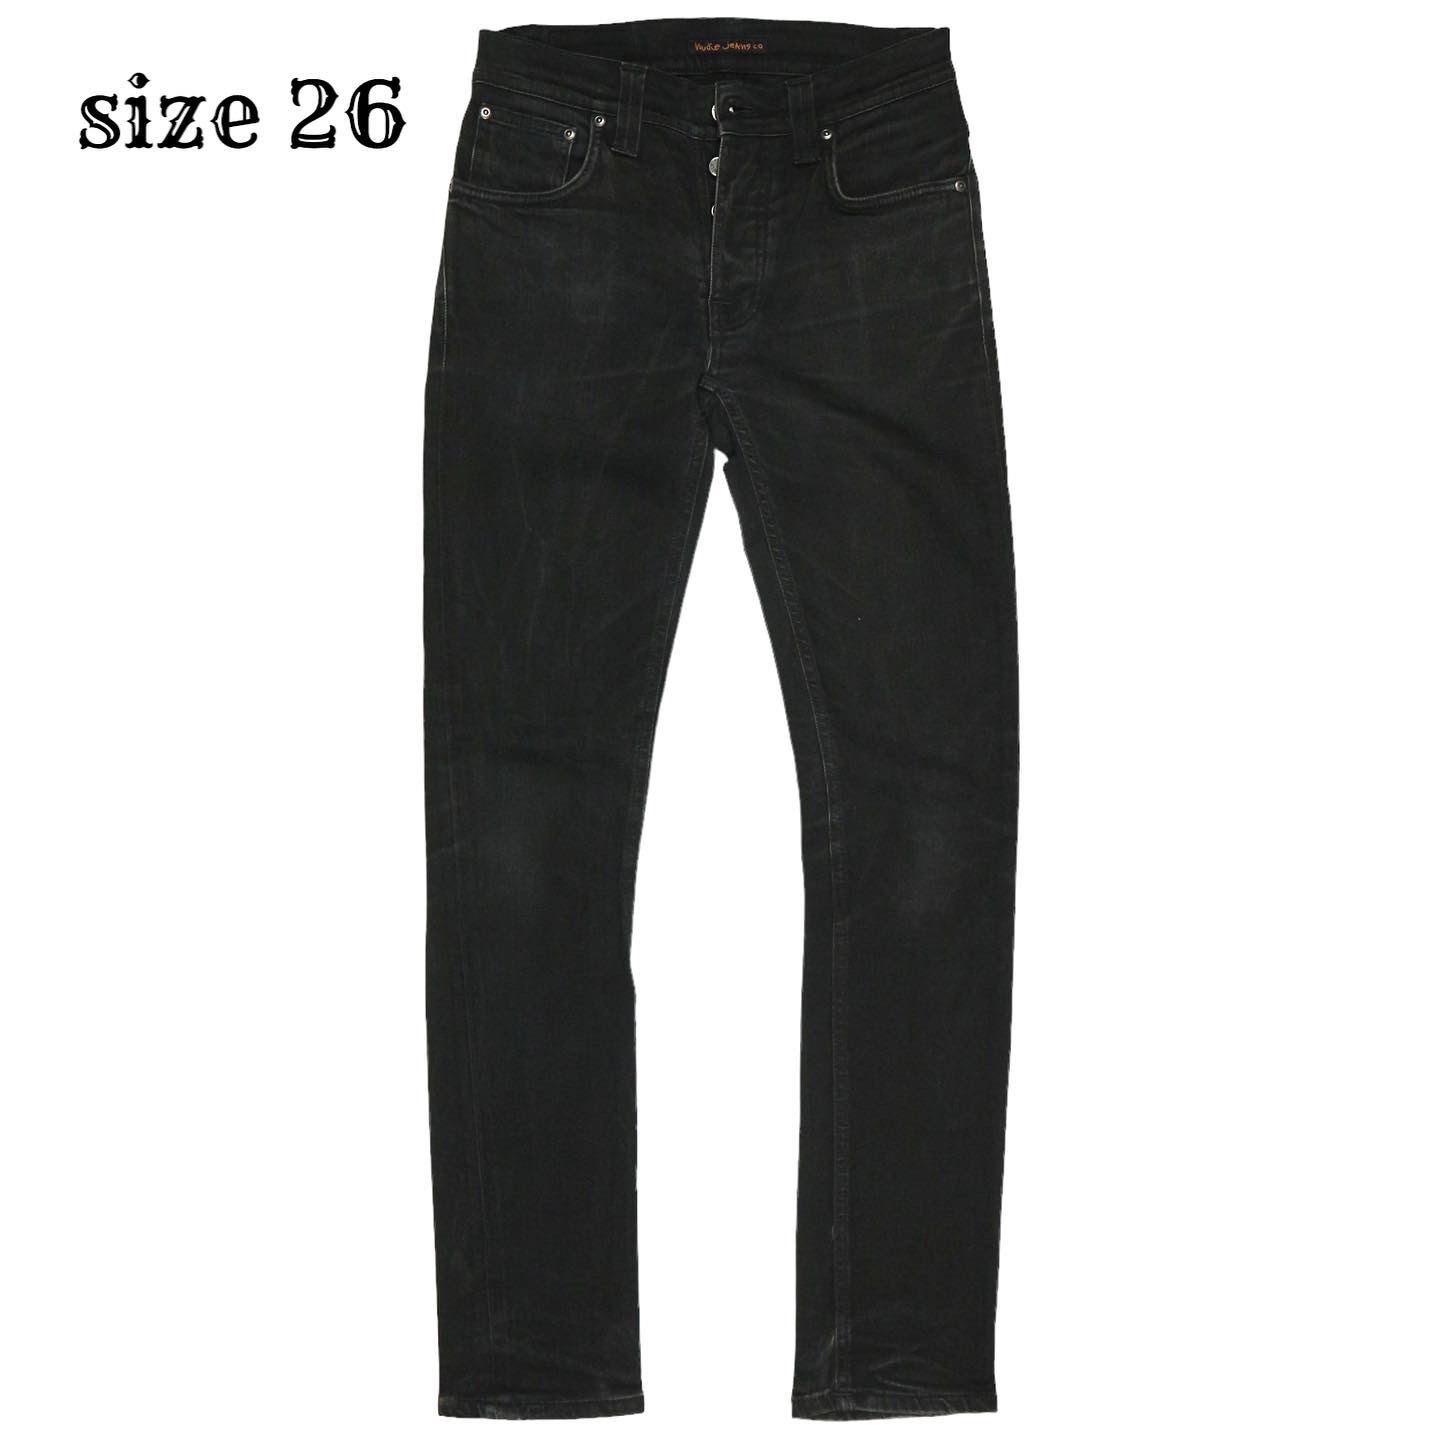 Nudie Jeans Size 26